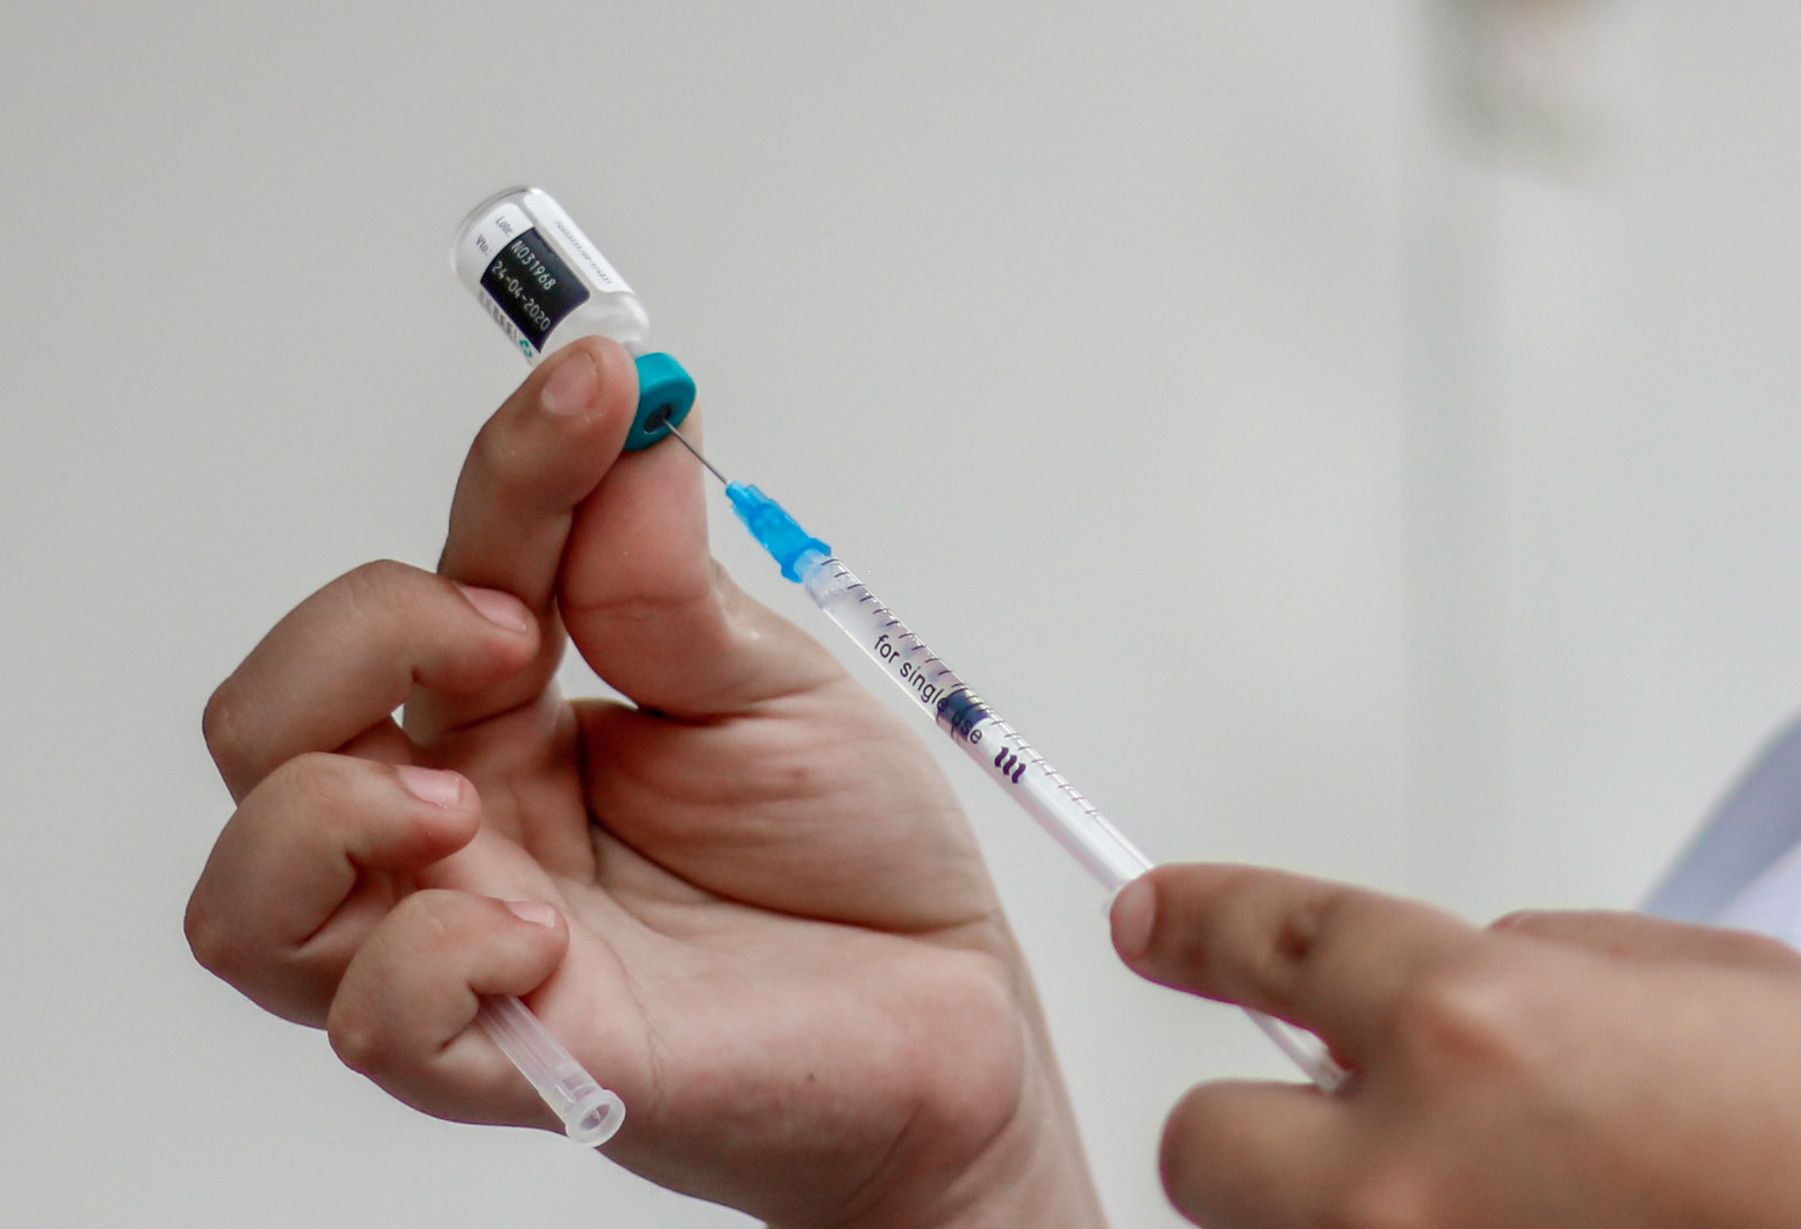 measles vaccination darla shine trump advisor wife cnn coverage criticism 